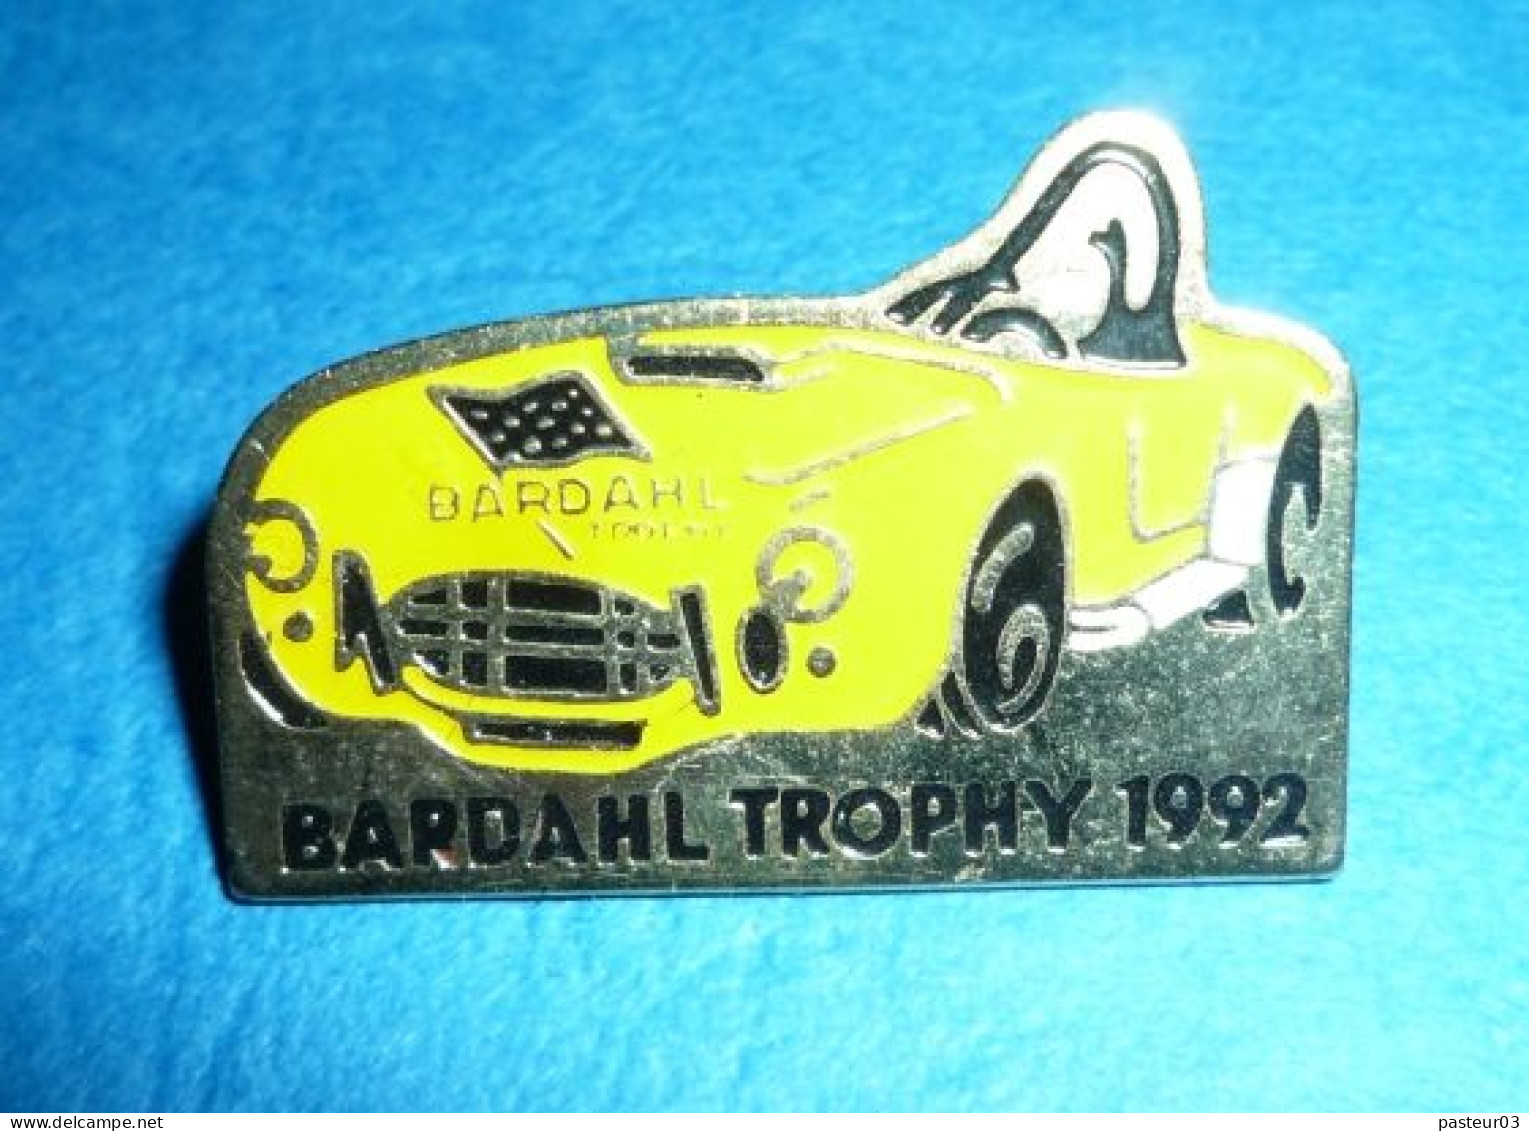 Bardhal Trophy 1992 Compétition Véhicules De Colletions Nevers Magny Cours (1ex.) - Carburants